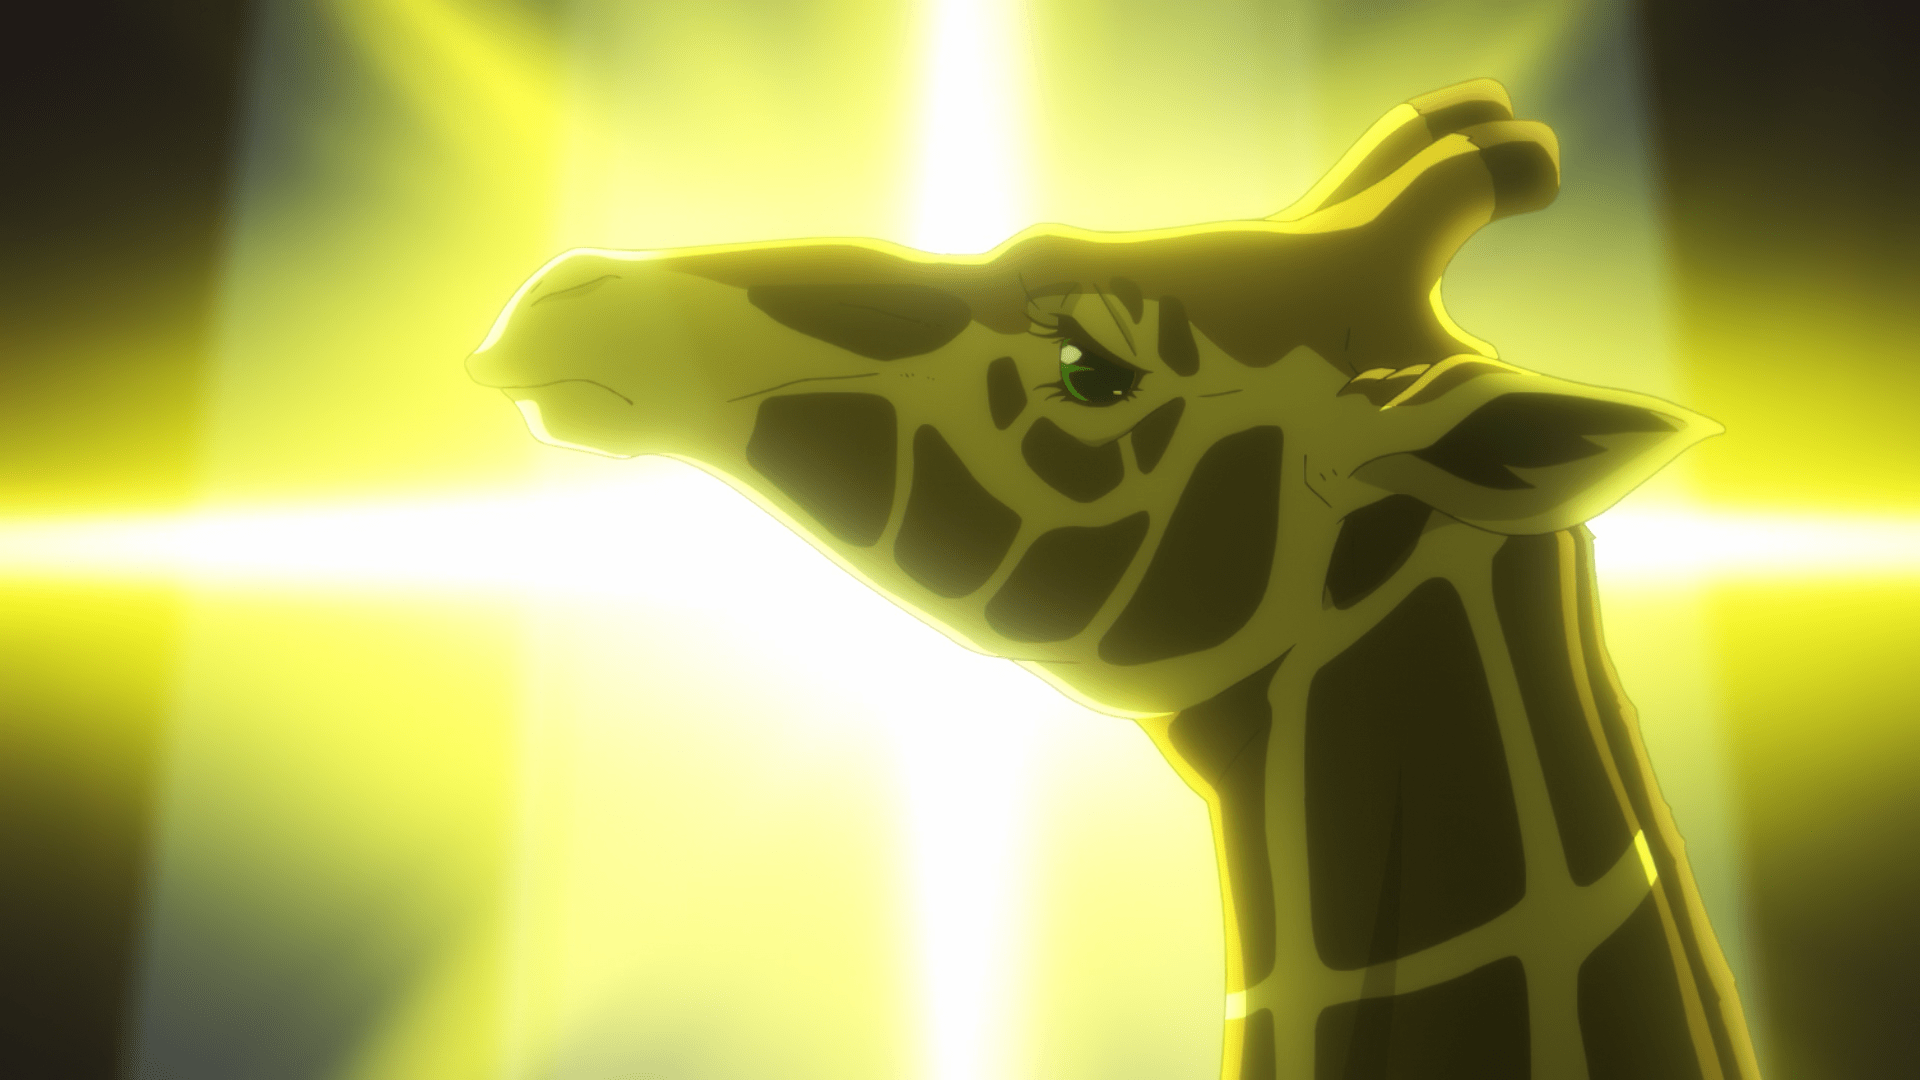 Mr Giraffe